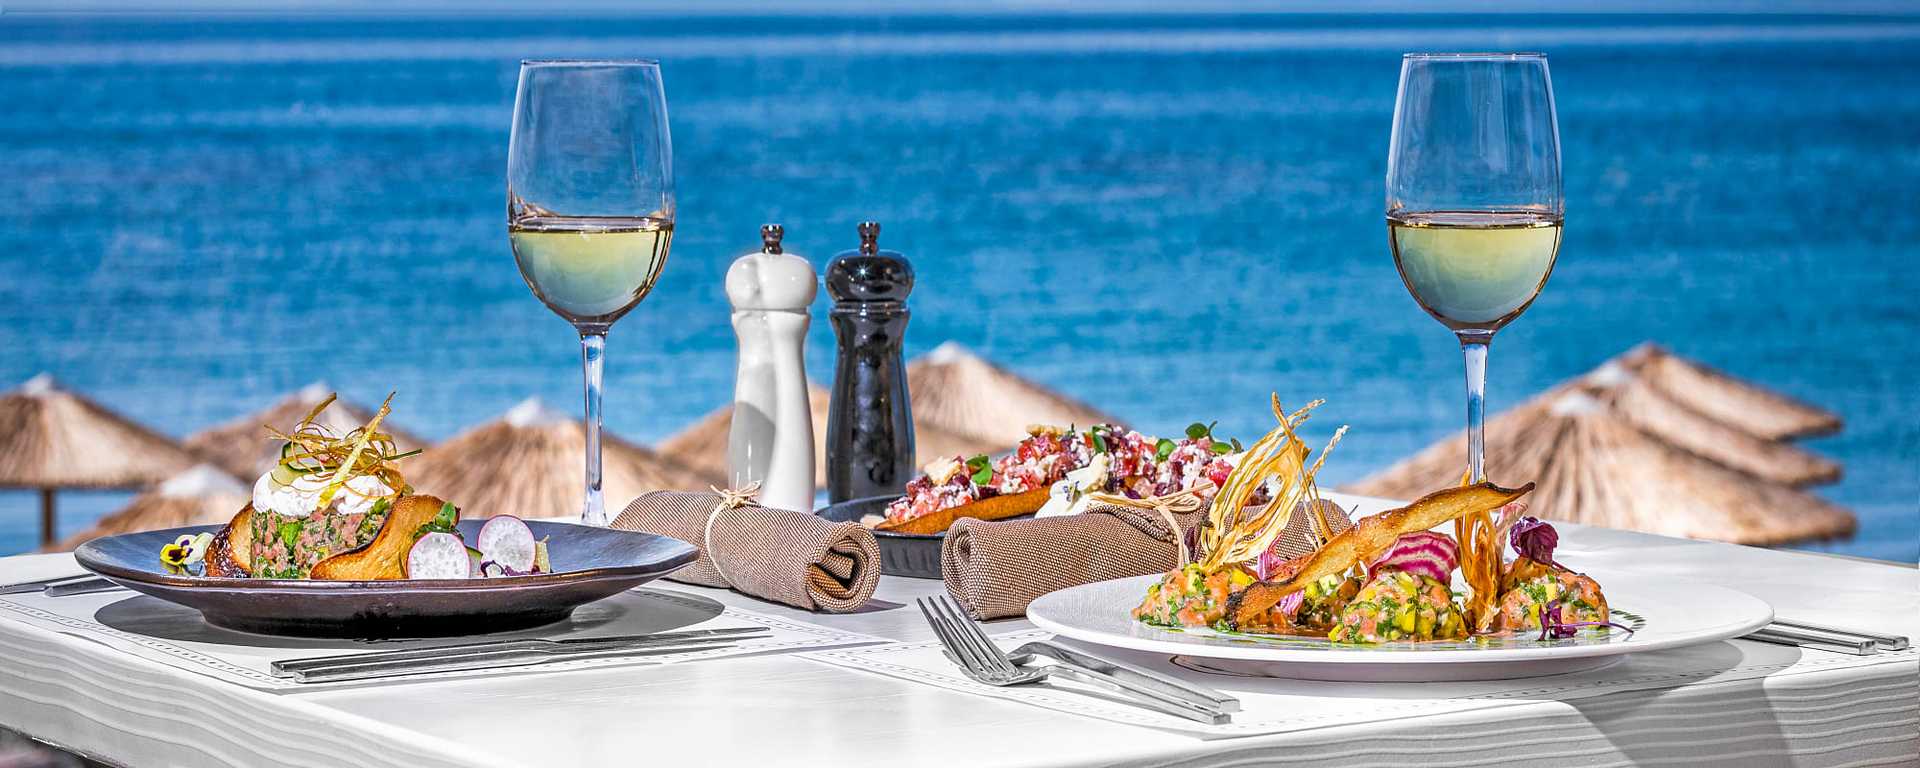 Beach side dining with Greek cuisine in Santorini